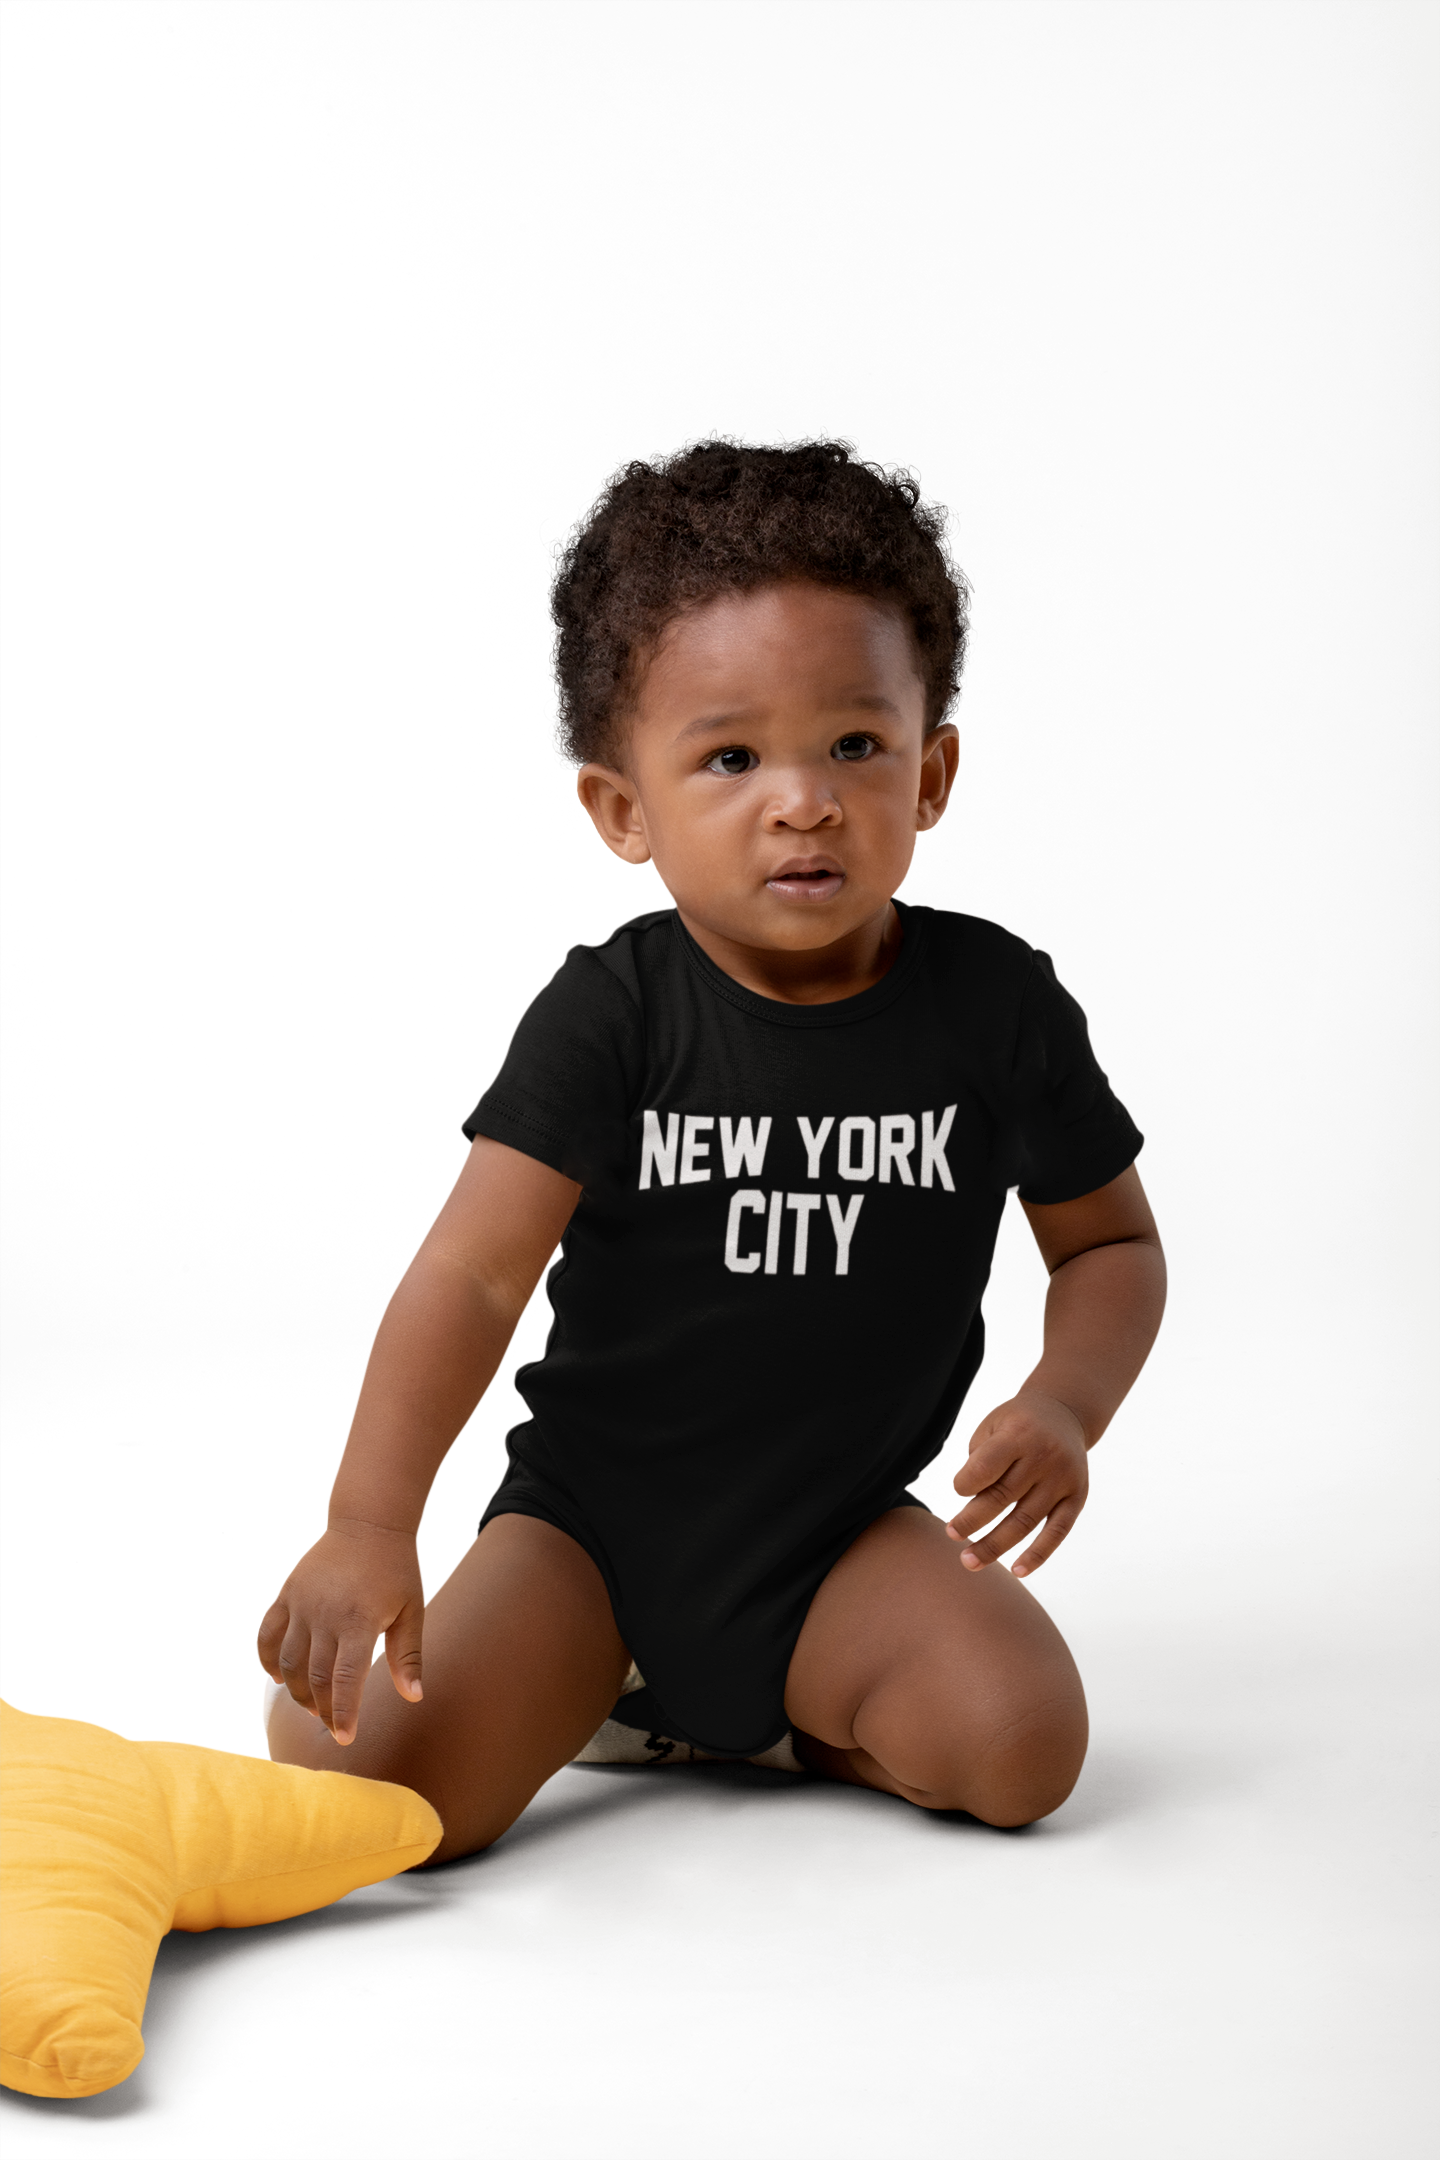 NEW YORK CITY BABY TEES